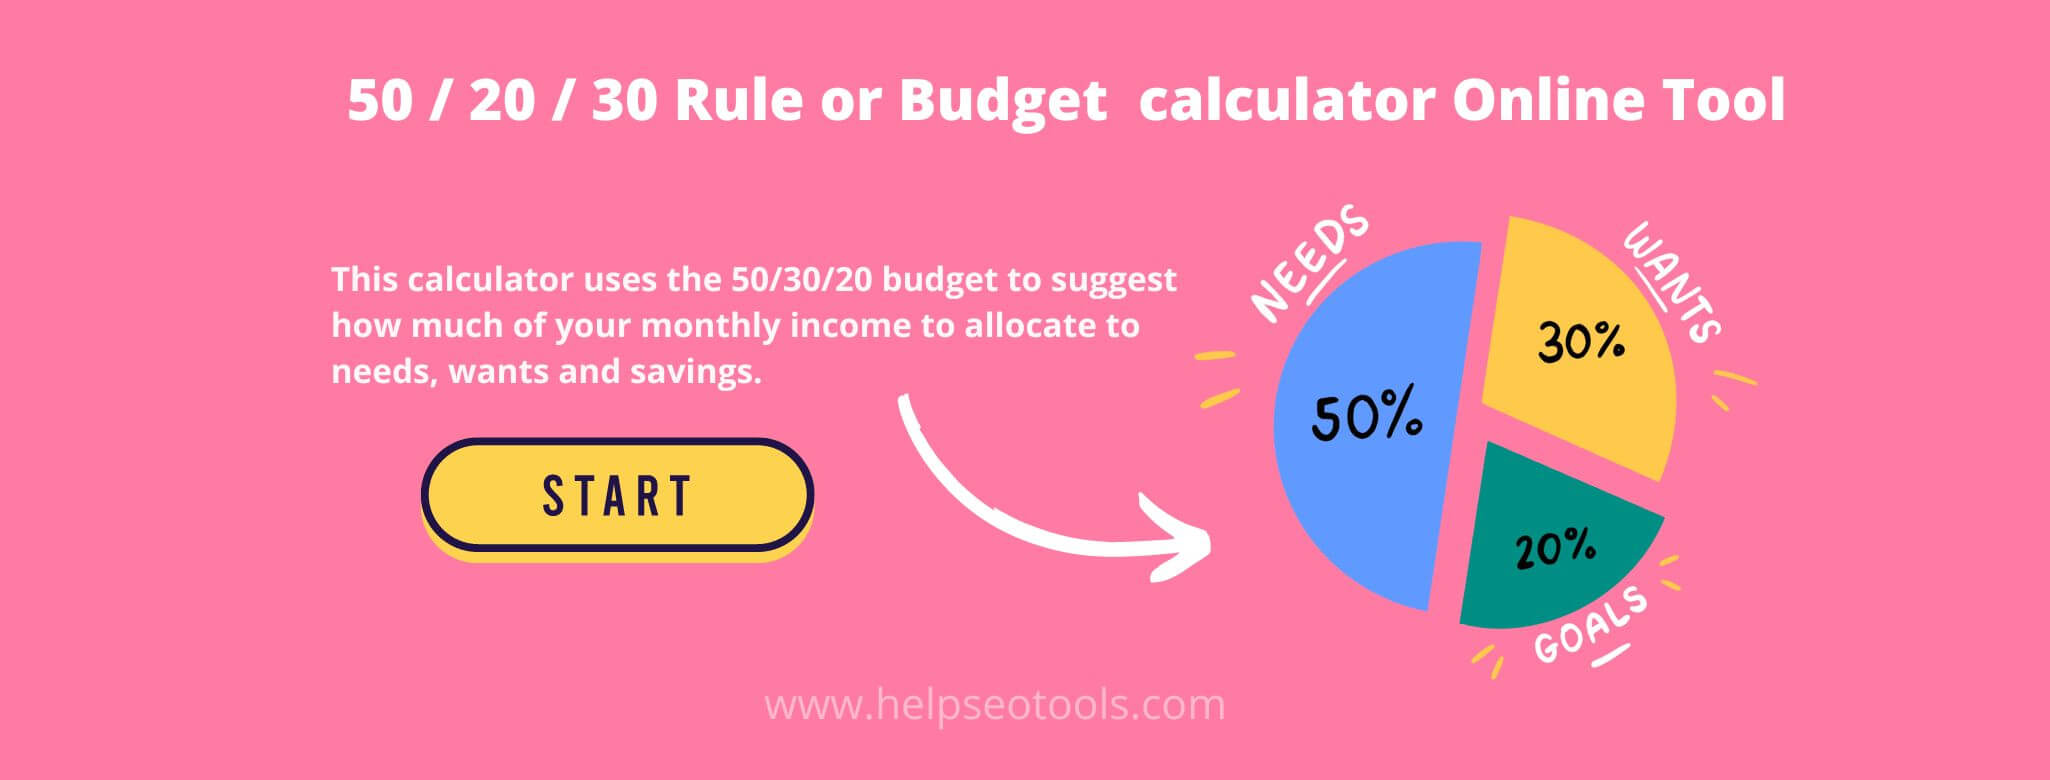 50 20 30 rule calculator | Budget calculator Online Tool 